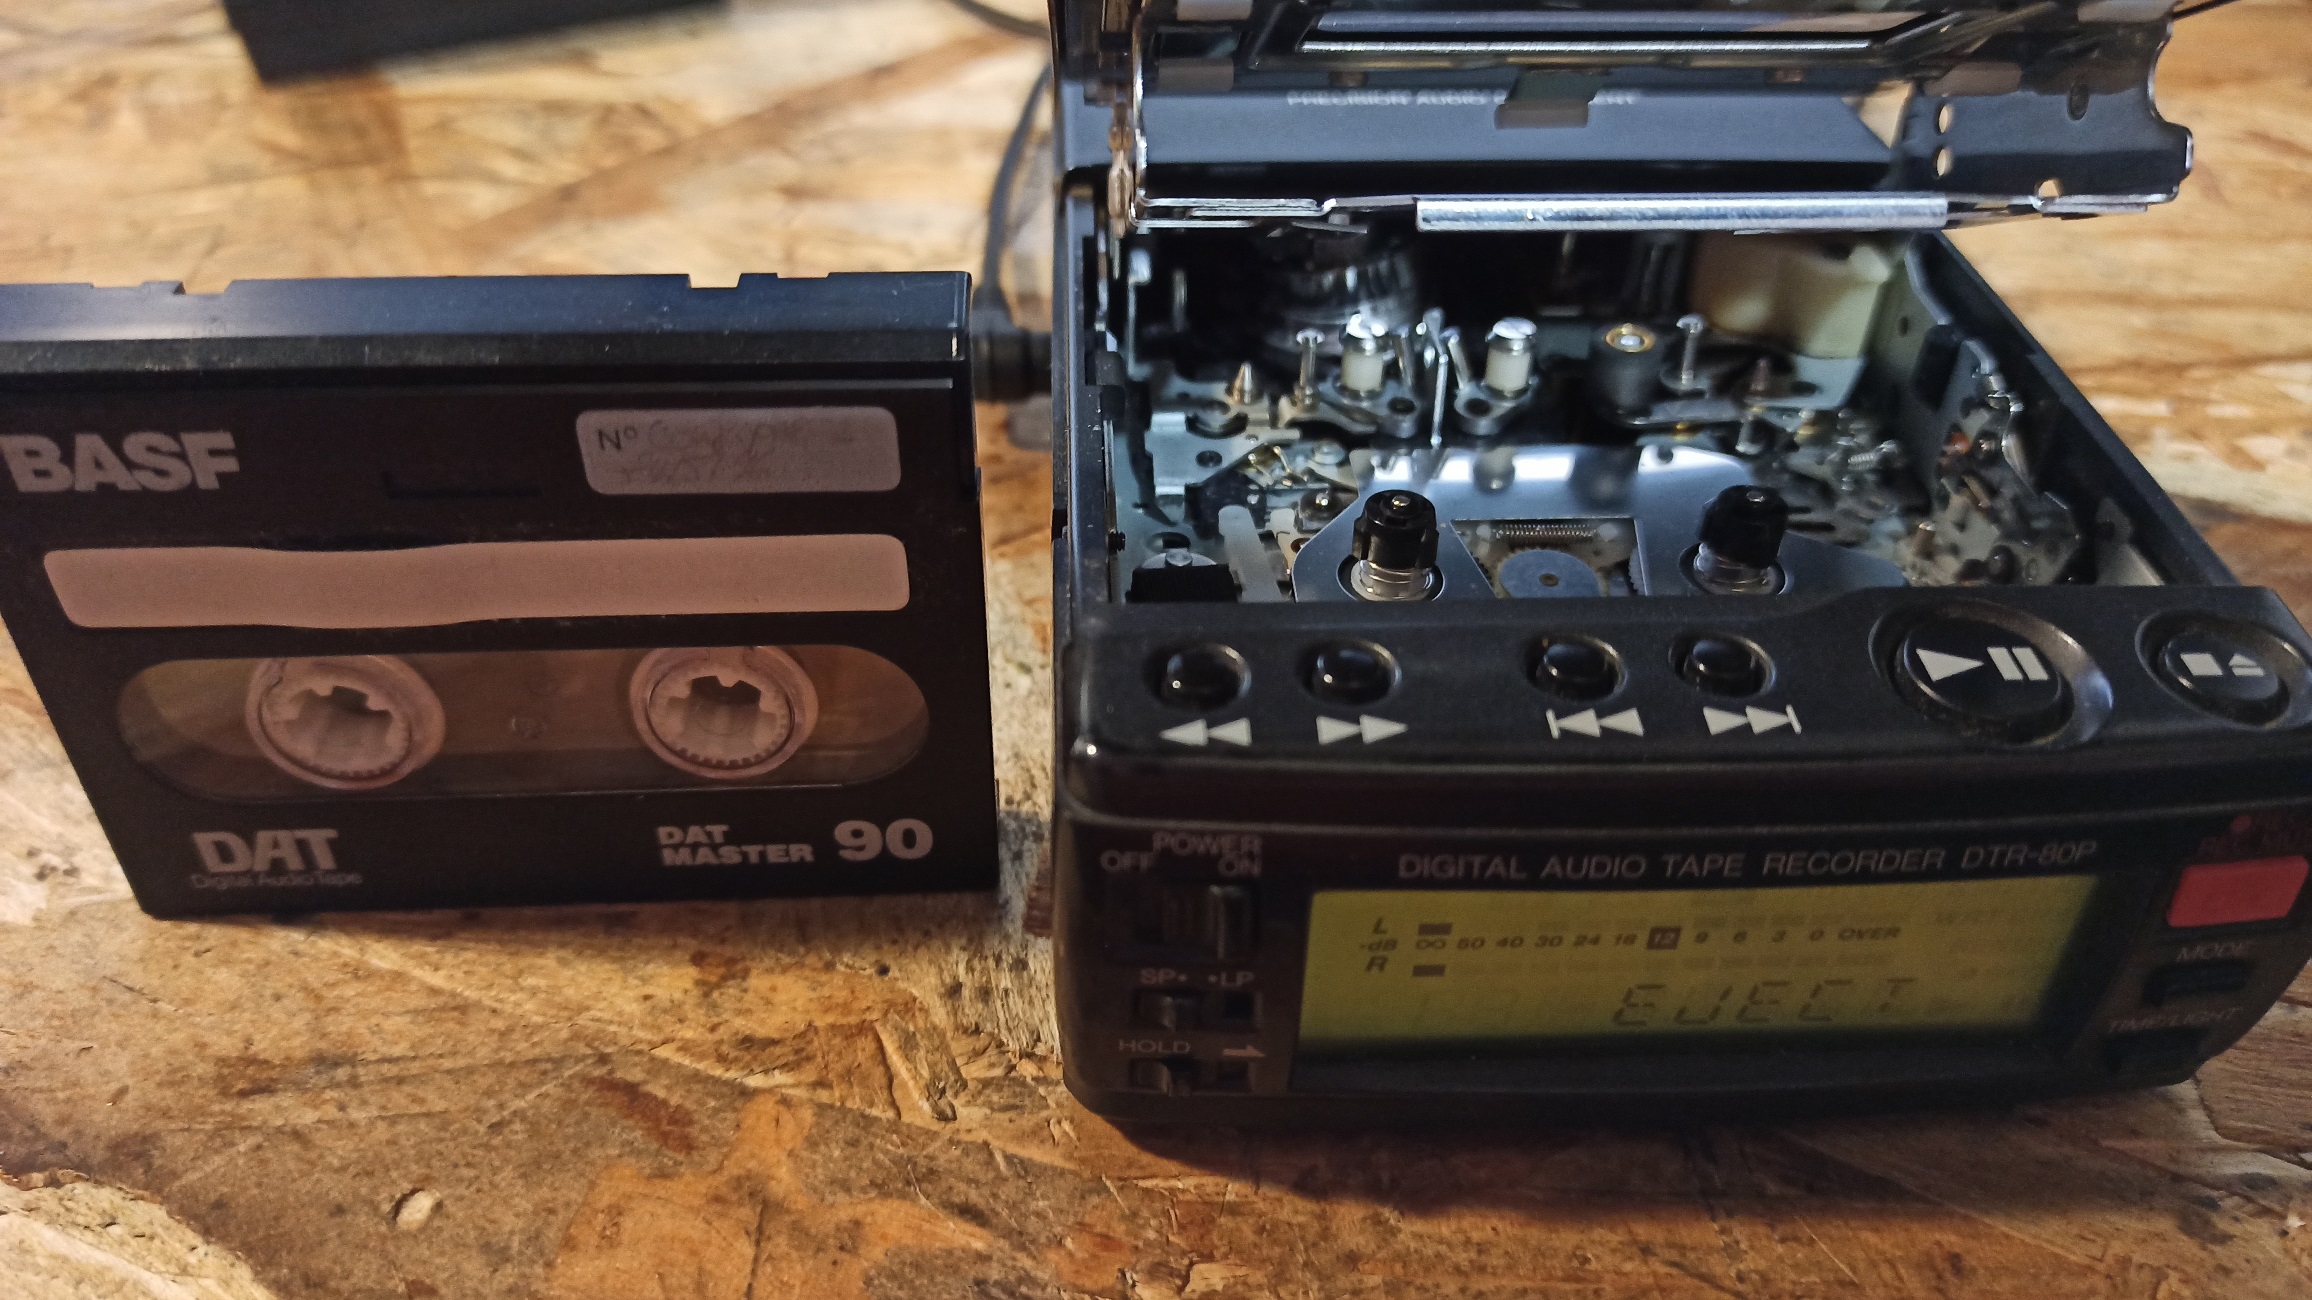 DTR-80P - Denon DTR-80P - Audiofanzine